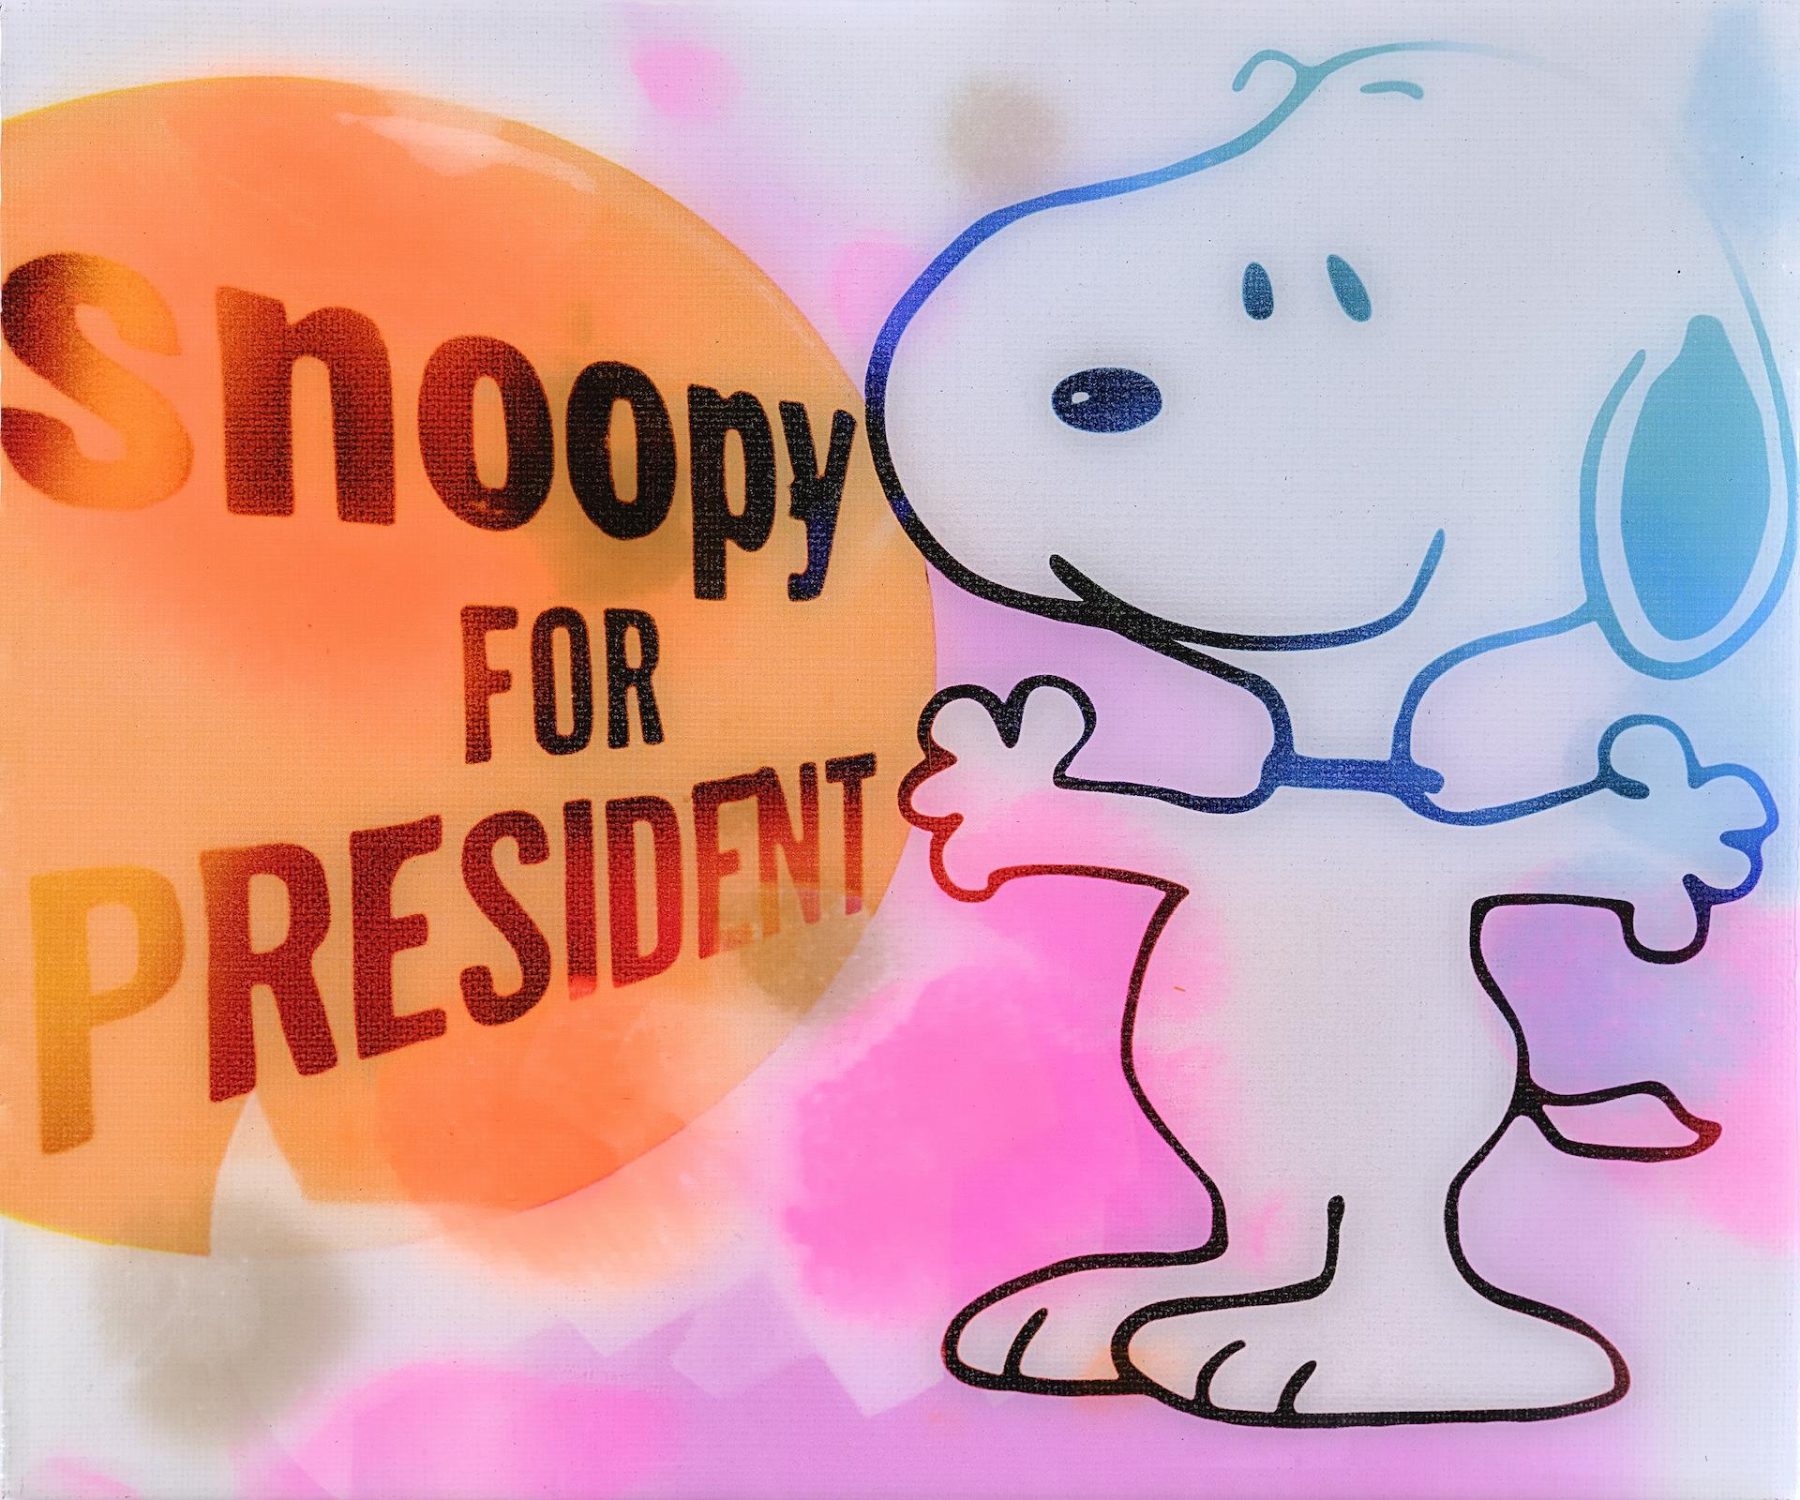 Snoopy for president - Döring, Jörg - k-DSFPR60-8